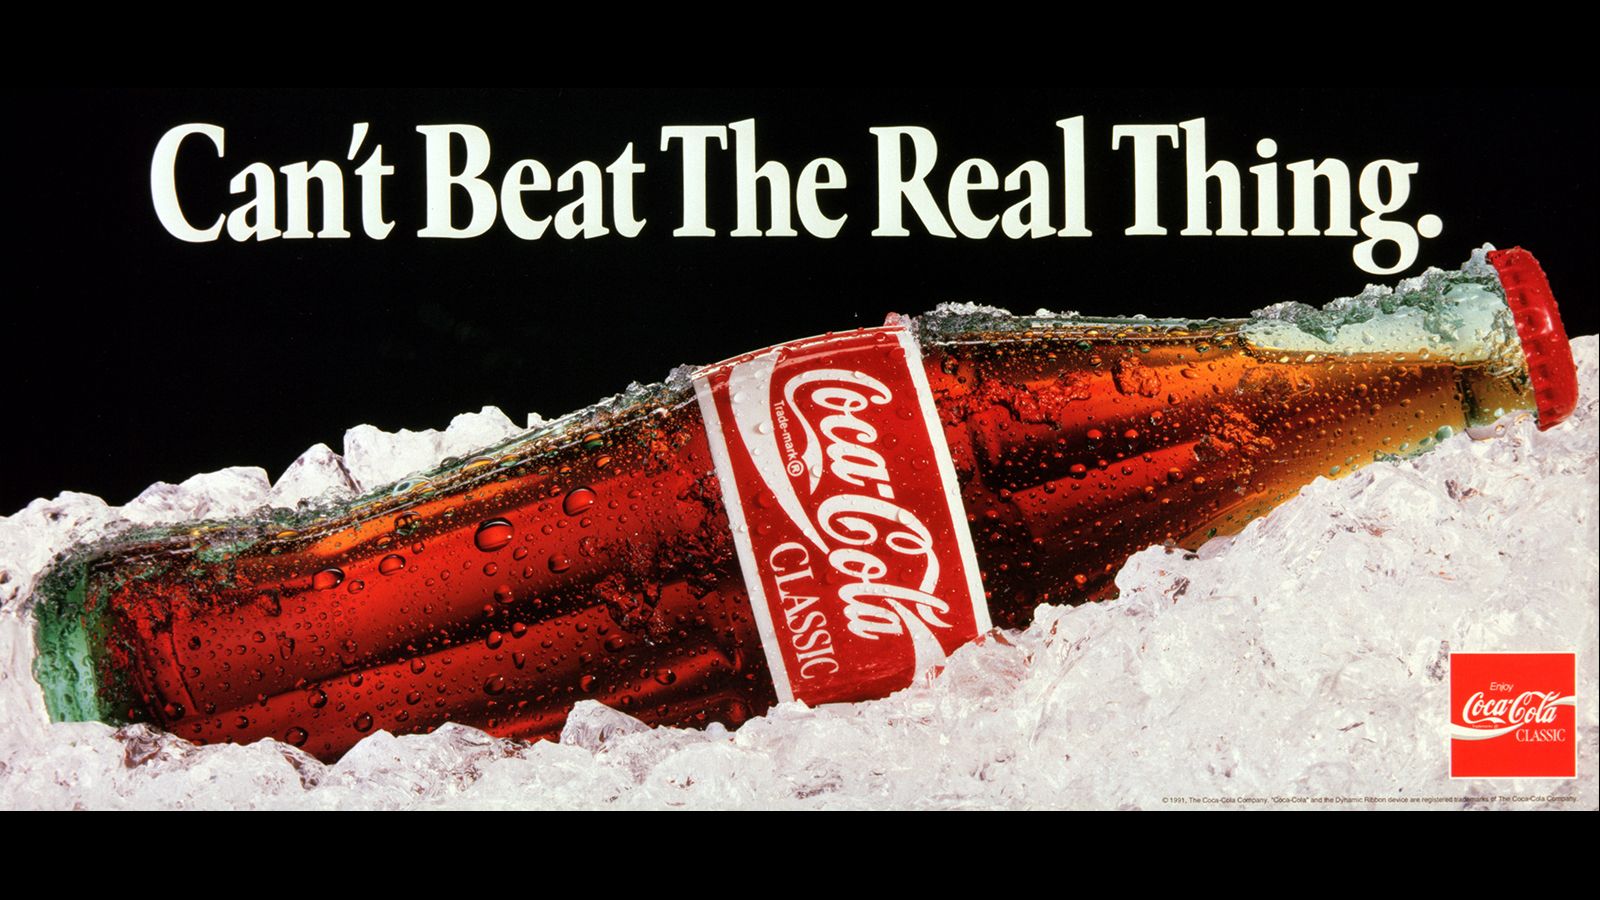 130 years of Coca-Cola ads | CNN